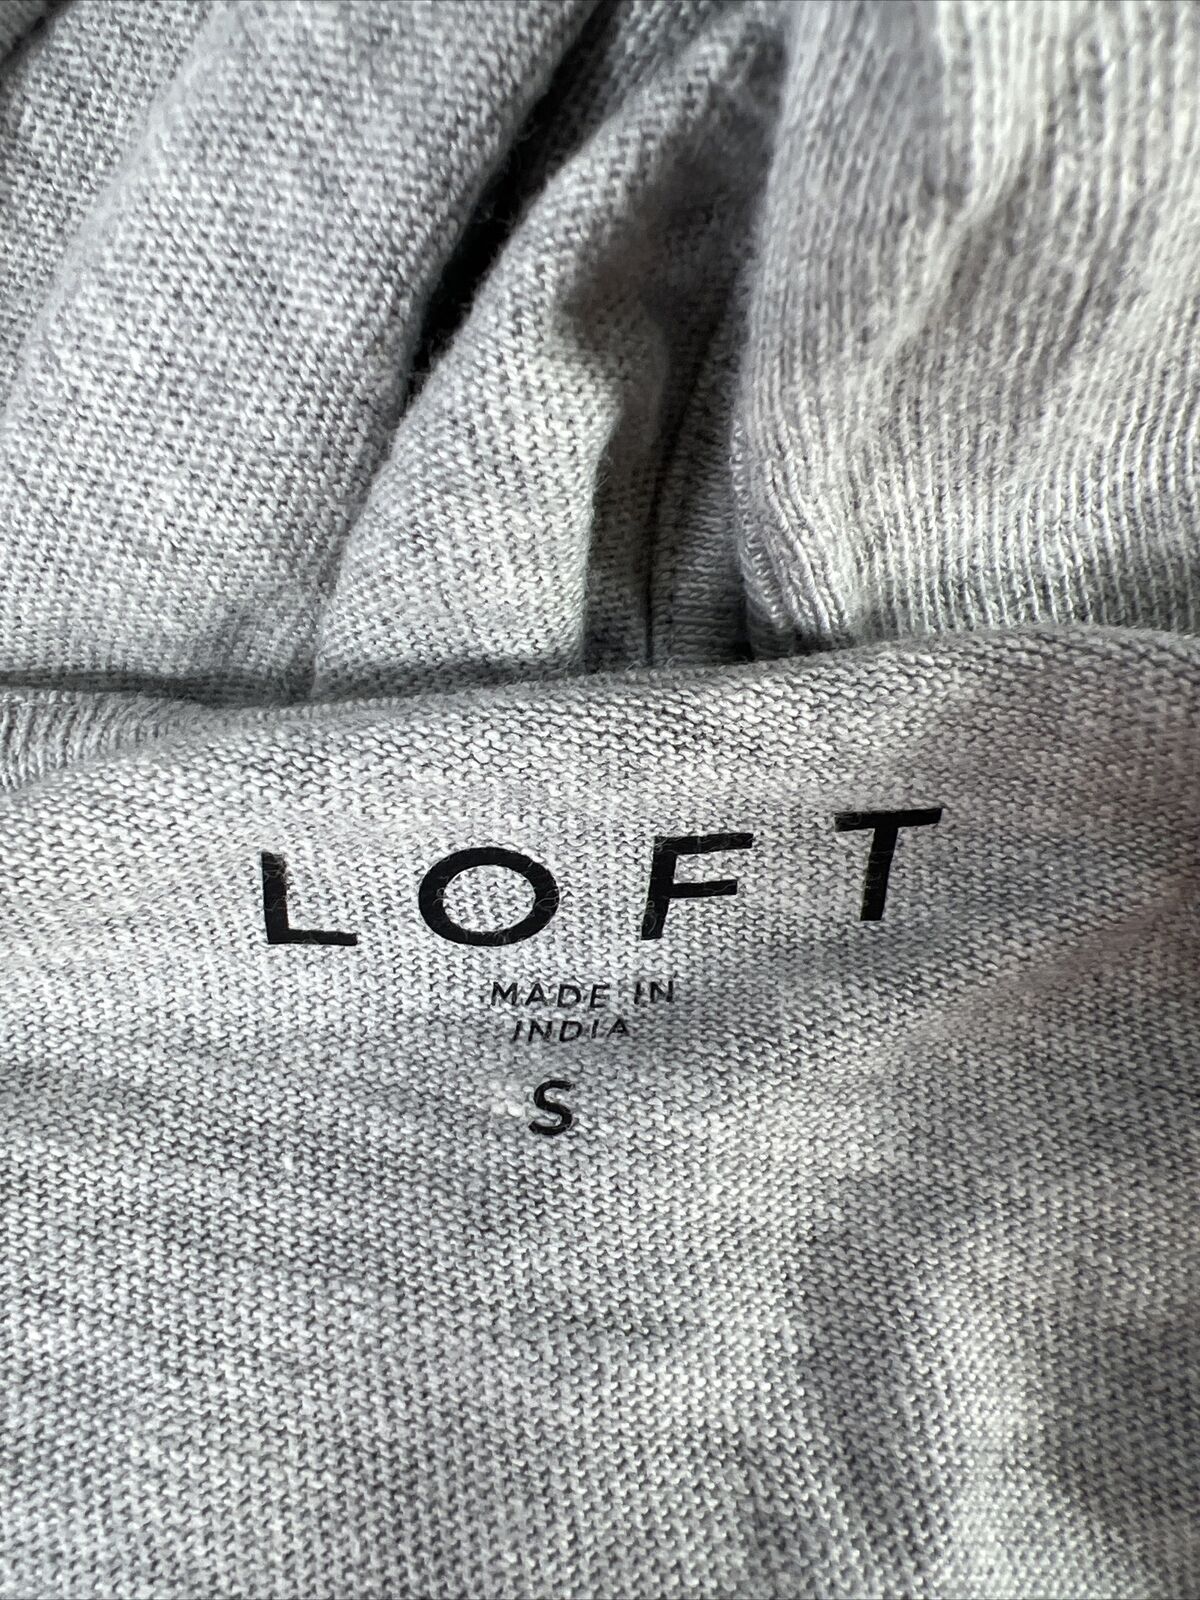 NEW LOFT Women's Gray Long Sleeve Thin Knit Hooded Shirt - S